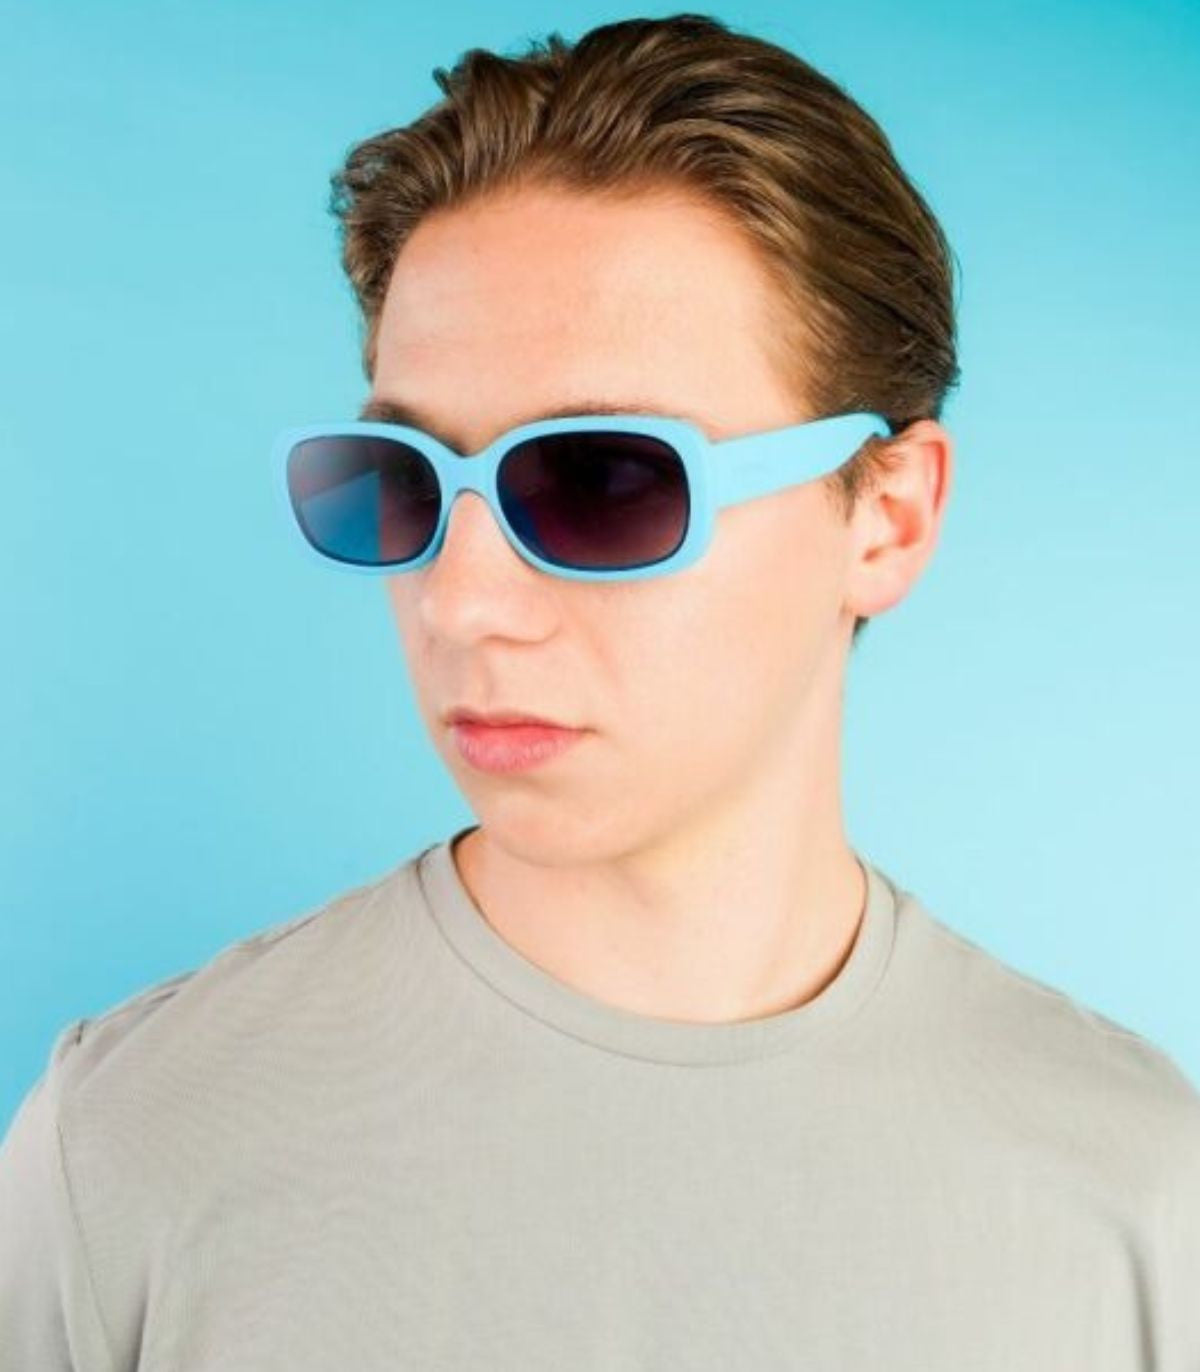 Sunglasses Capri Blue